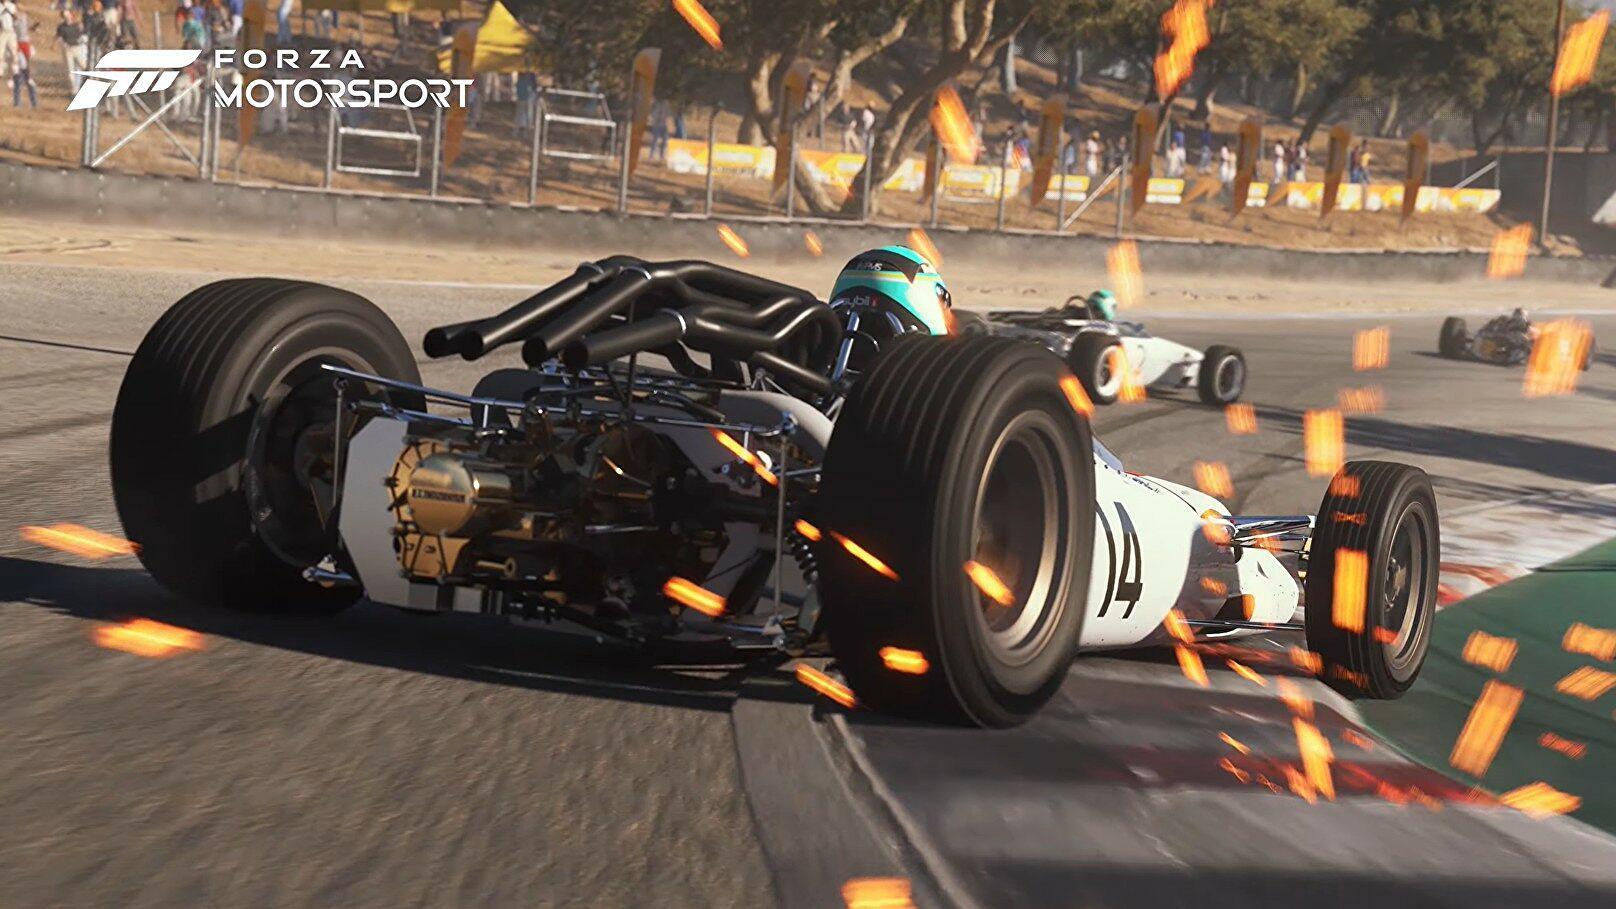 Forza Motorsport confirma como será o desempenho nos consoles Xbox Series X e S